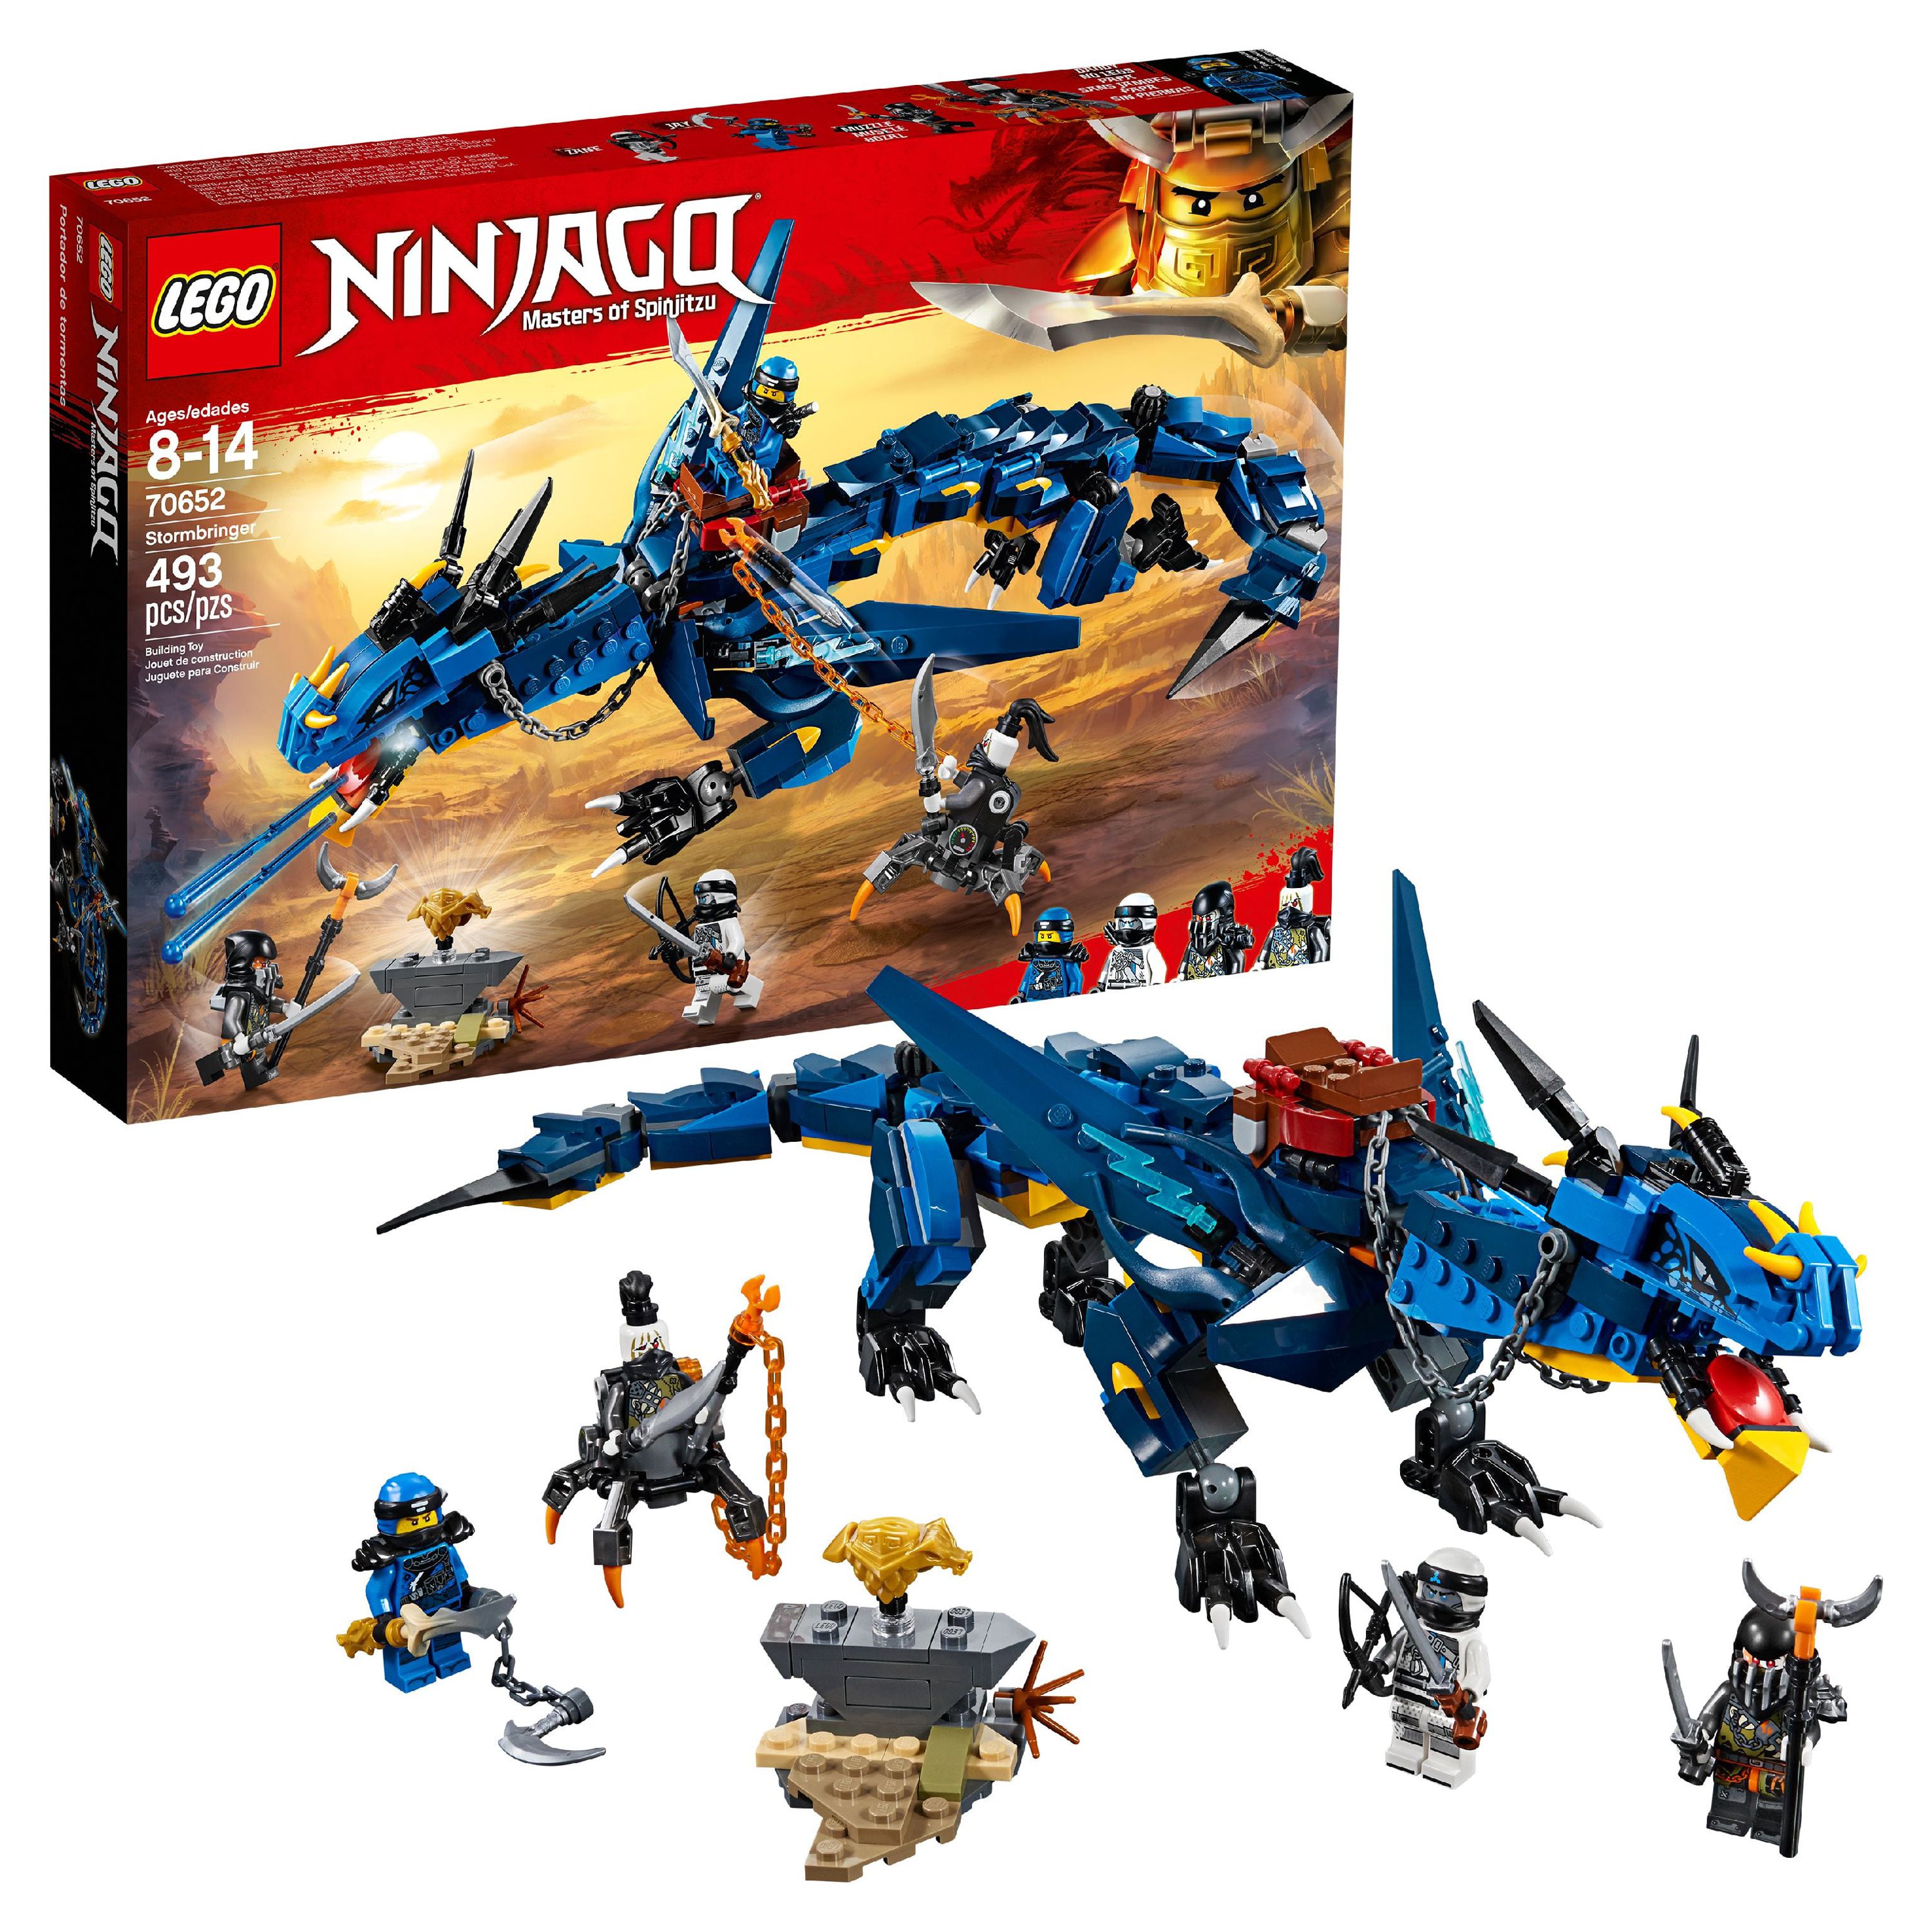 LEGO NINJAGO Masters of Spinjitzu: Stormbringer 70652 Ninja Toy Building Kit with Blue Dragon Model for Kids, Best Playset Gift for Boys (493 Piece) - image 1 of 8